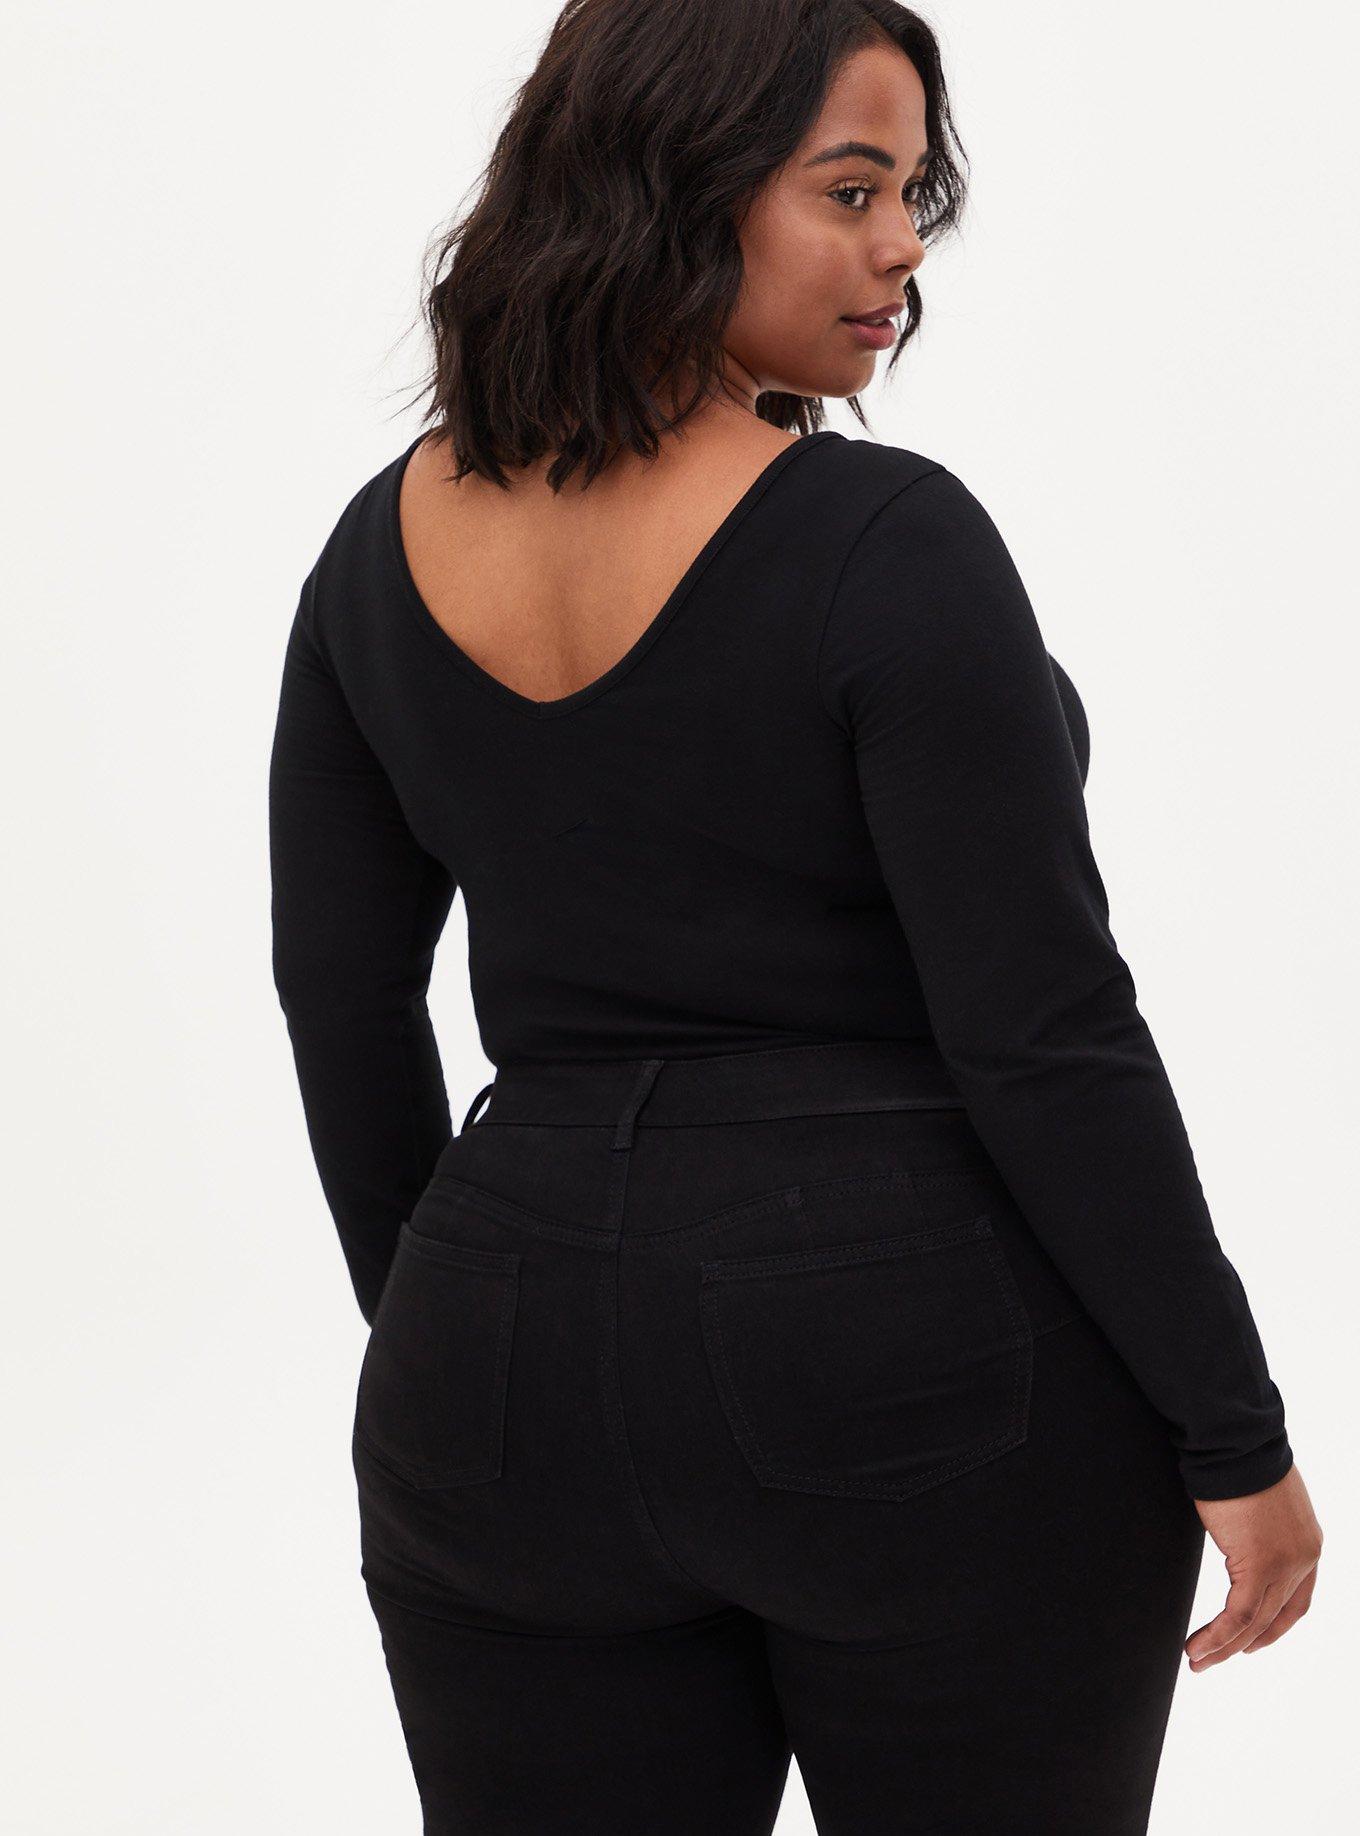  Sveltors Women's Plus Size Black Bodysuit Deep V Neck Long  Sleeve Body Suit Tops Smooth Stretchy Sexy Bodysuits Basic Shirts :  Clothing, Shoes & Jewelry